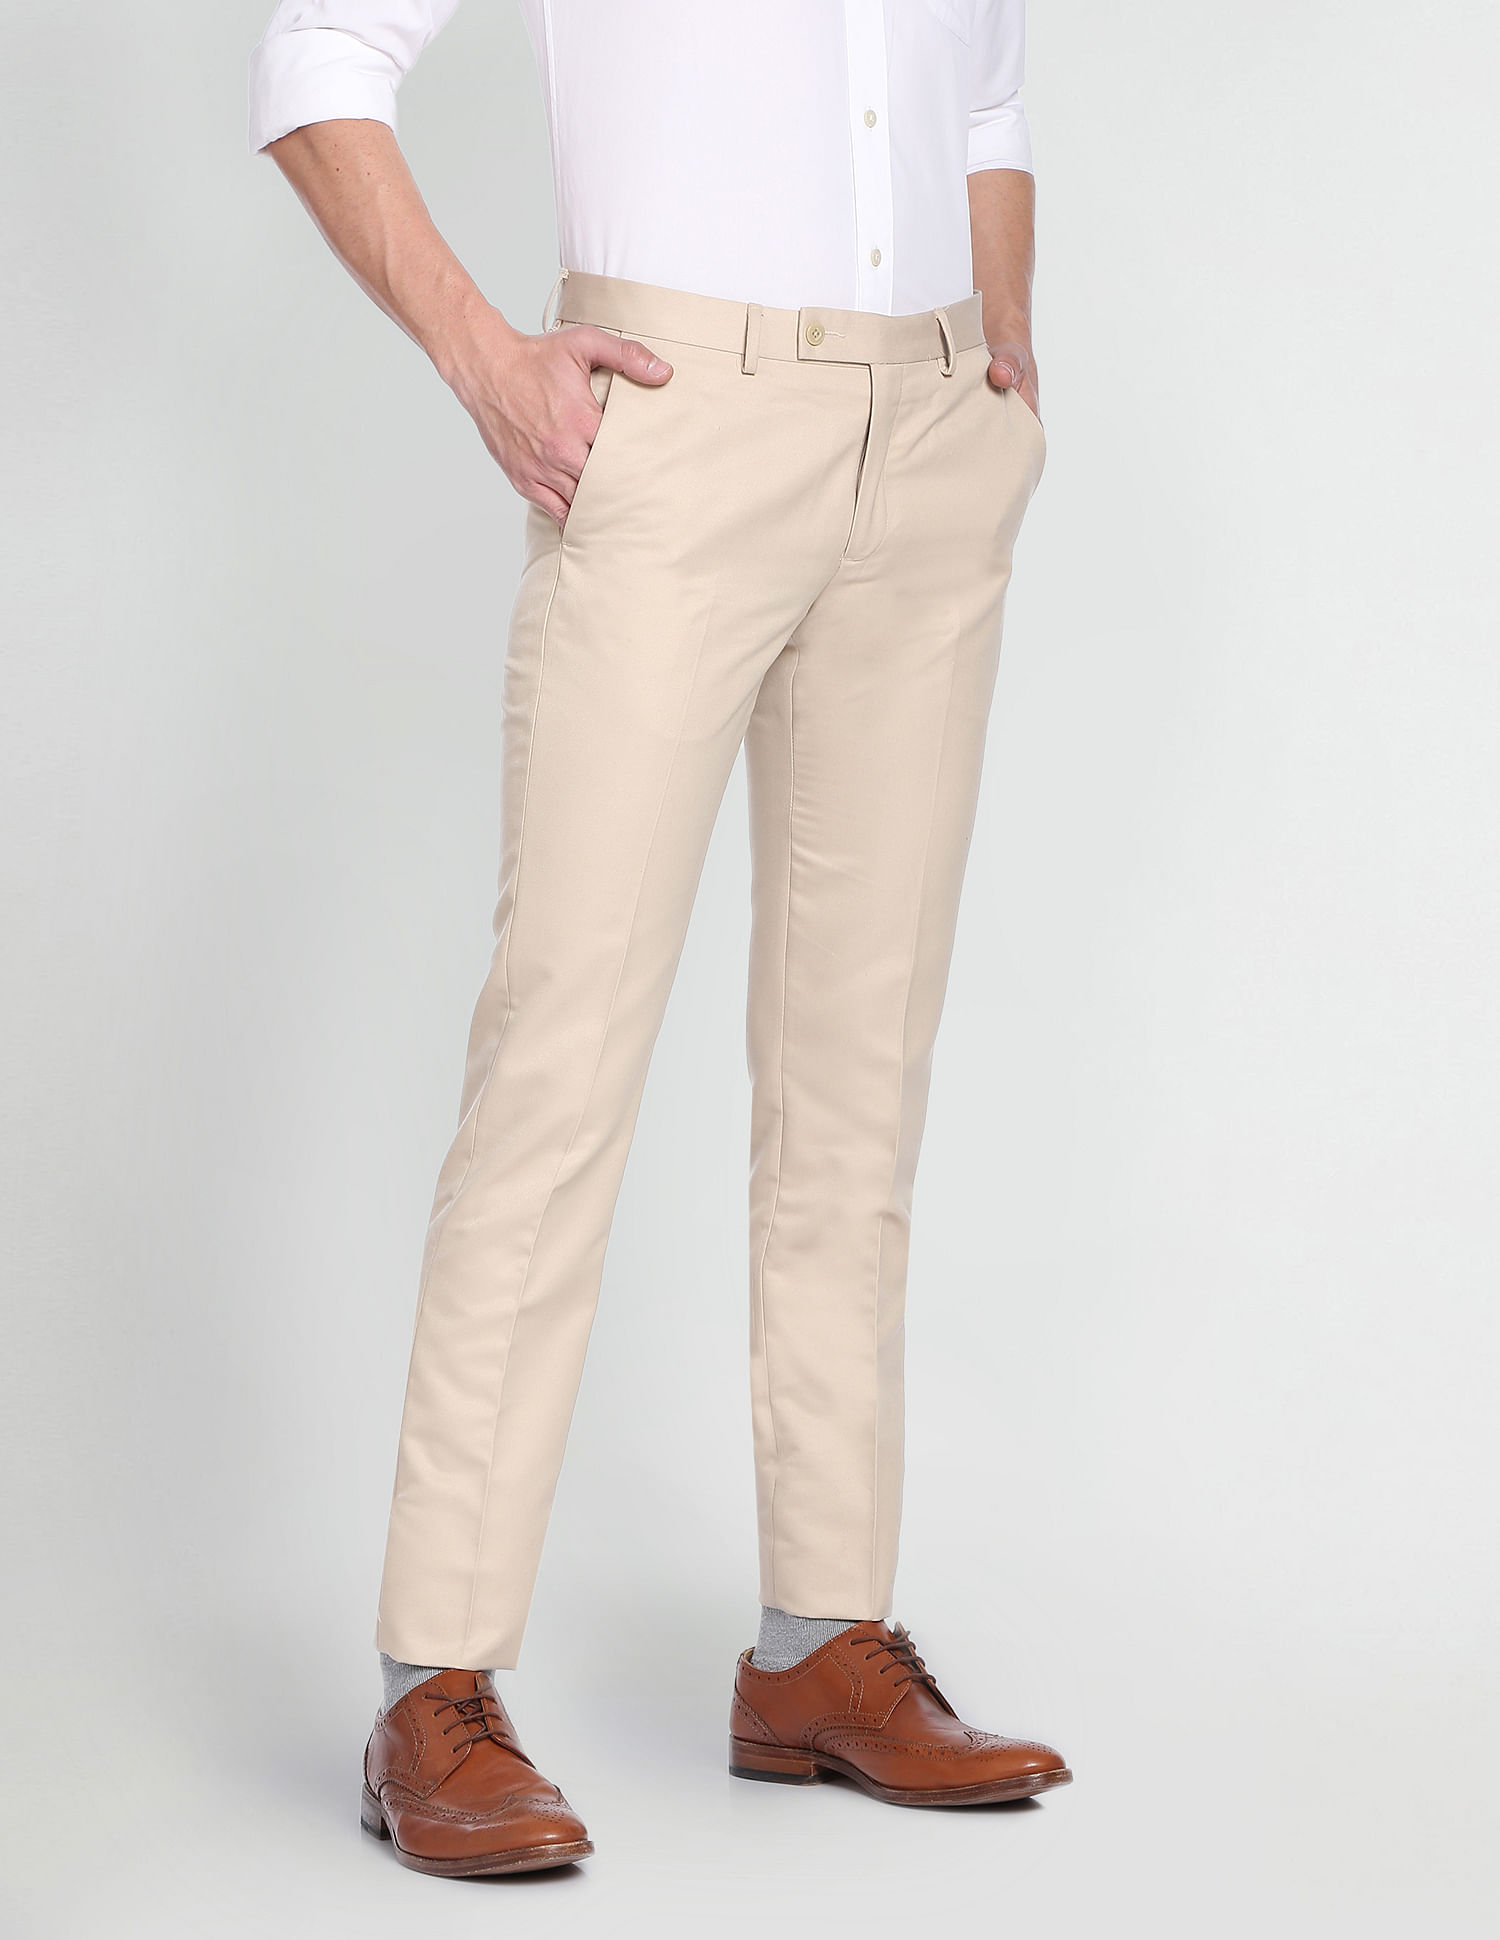 Buy Arrow Twill Stretch Solid Formal Trousers - NNNOW.com